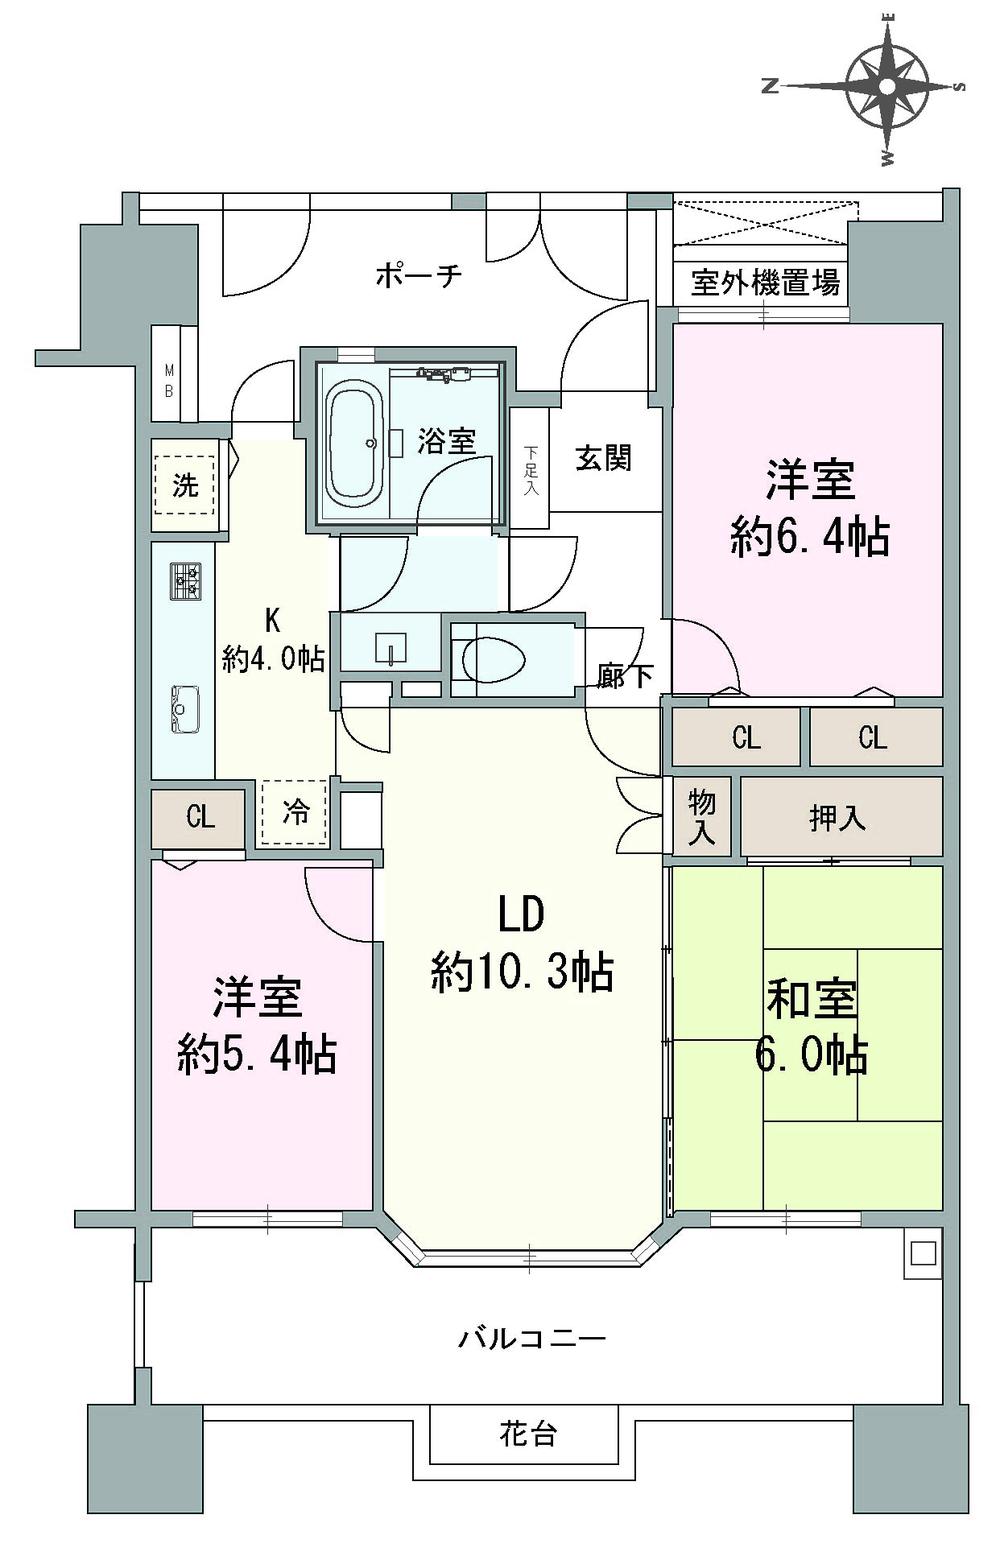 Floor plan. 3LDK, Price 26.7 million yen, Occupied area 70.03 sq m , Balcony area 15.16 sq m